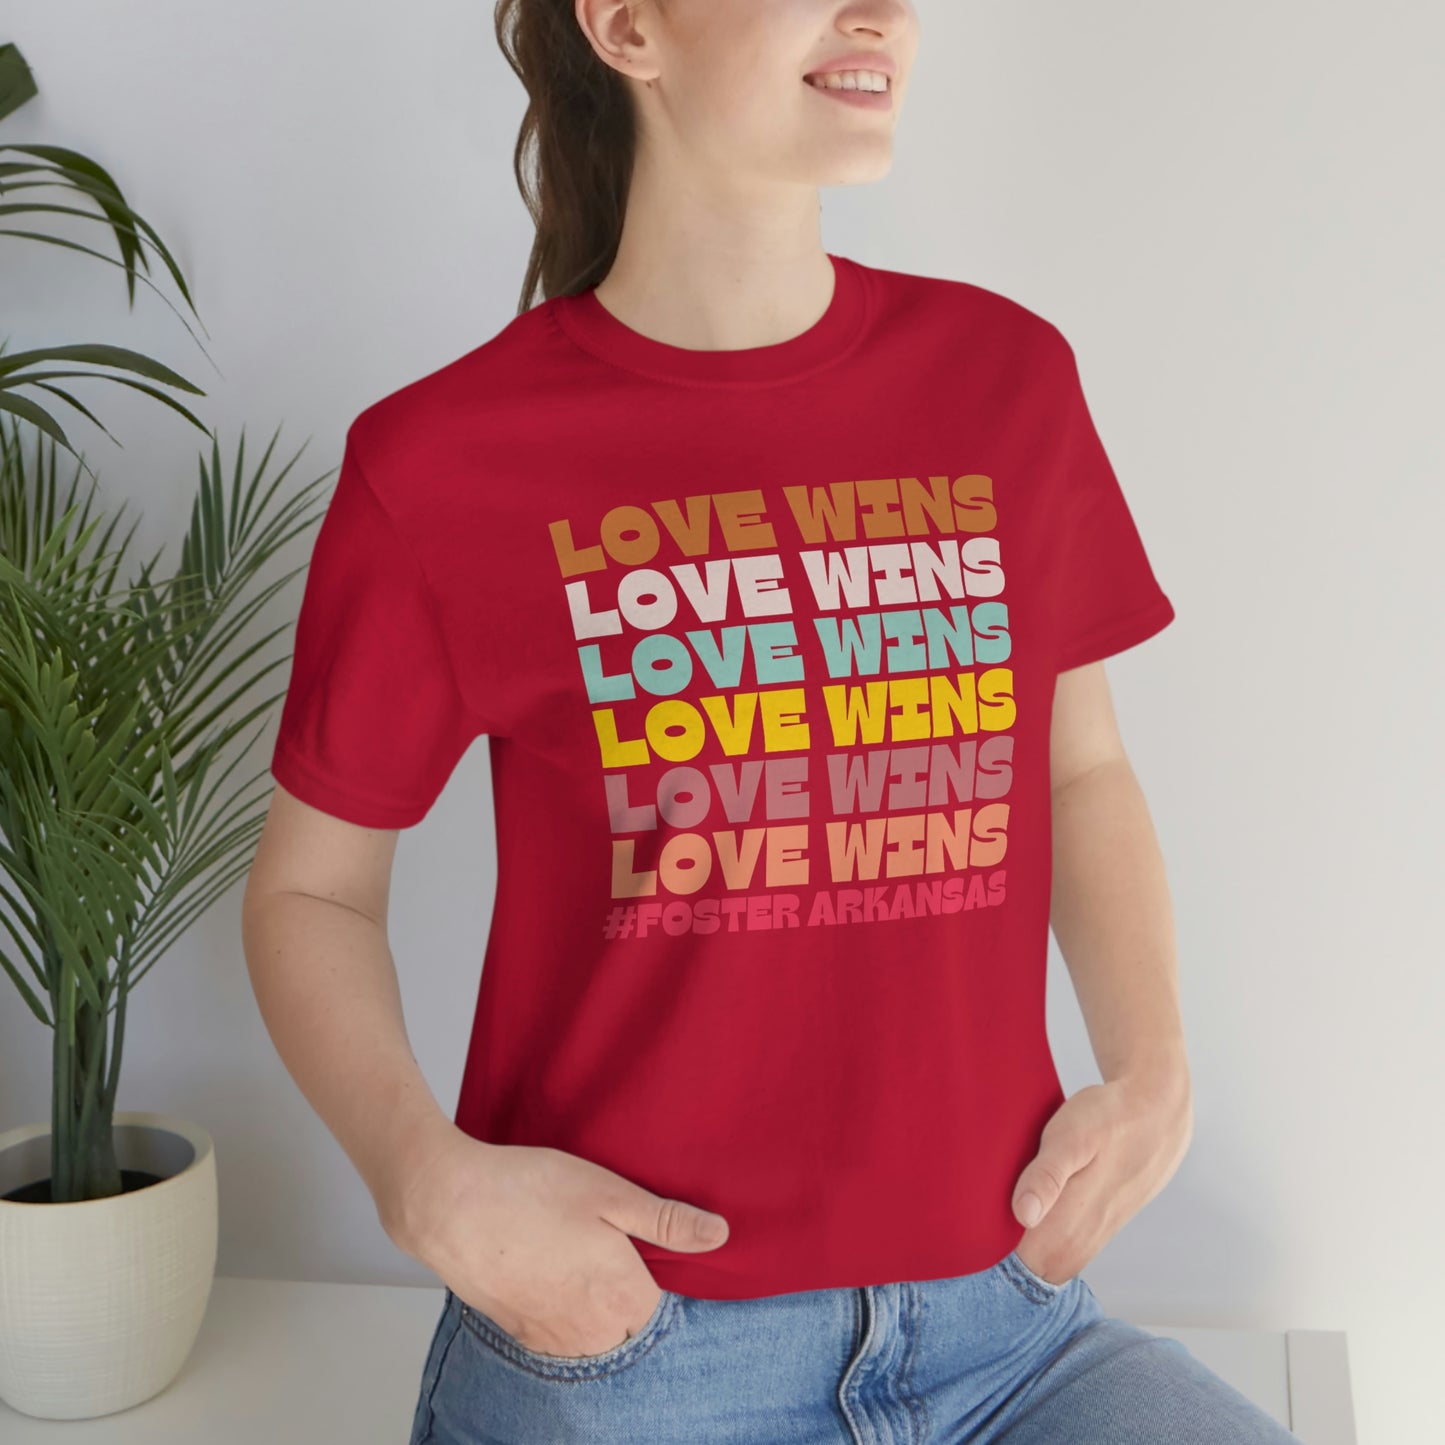 Love Wins Repeat #Foster Arkansas Shirt